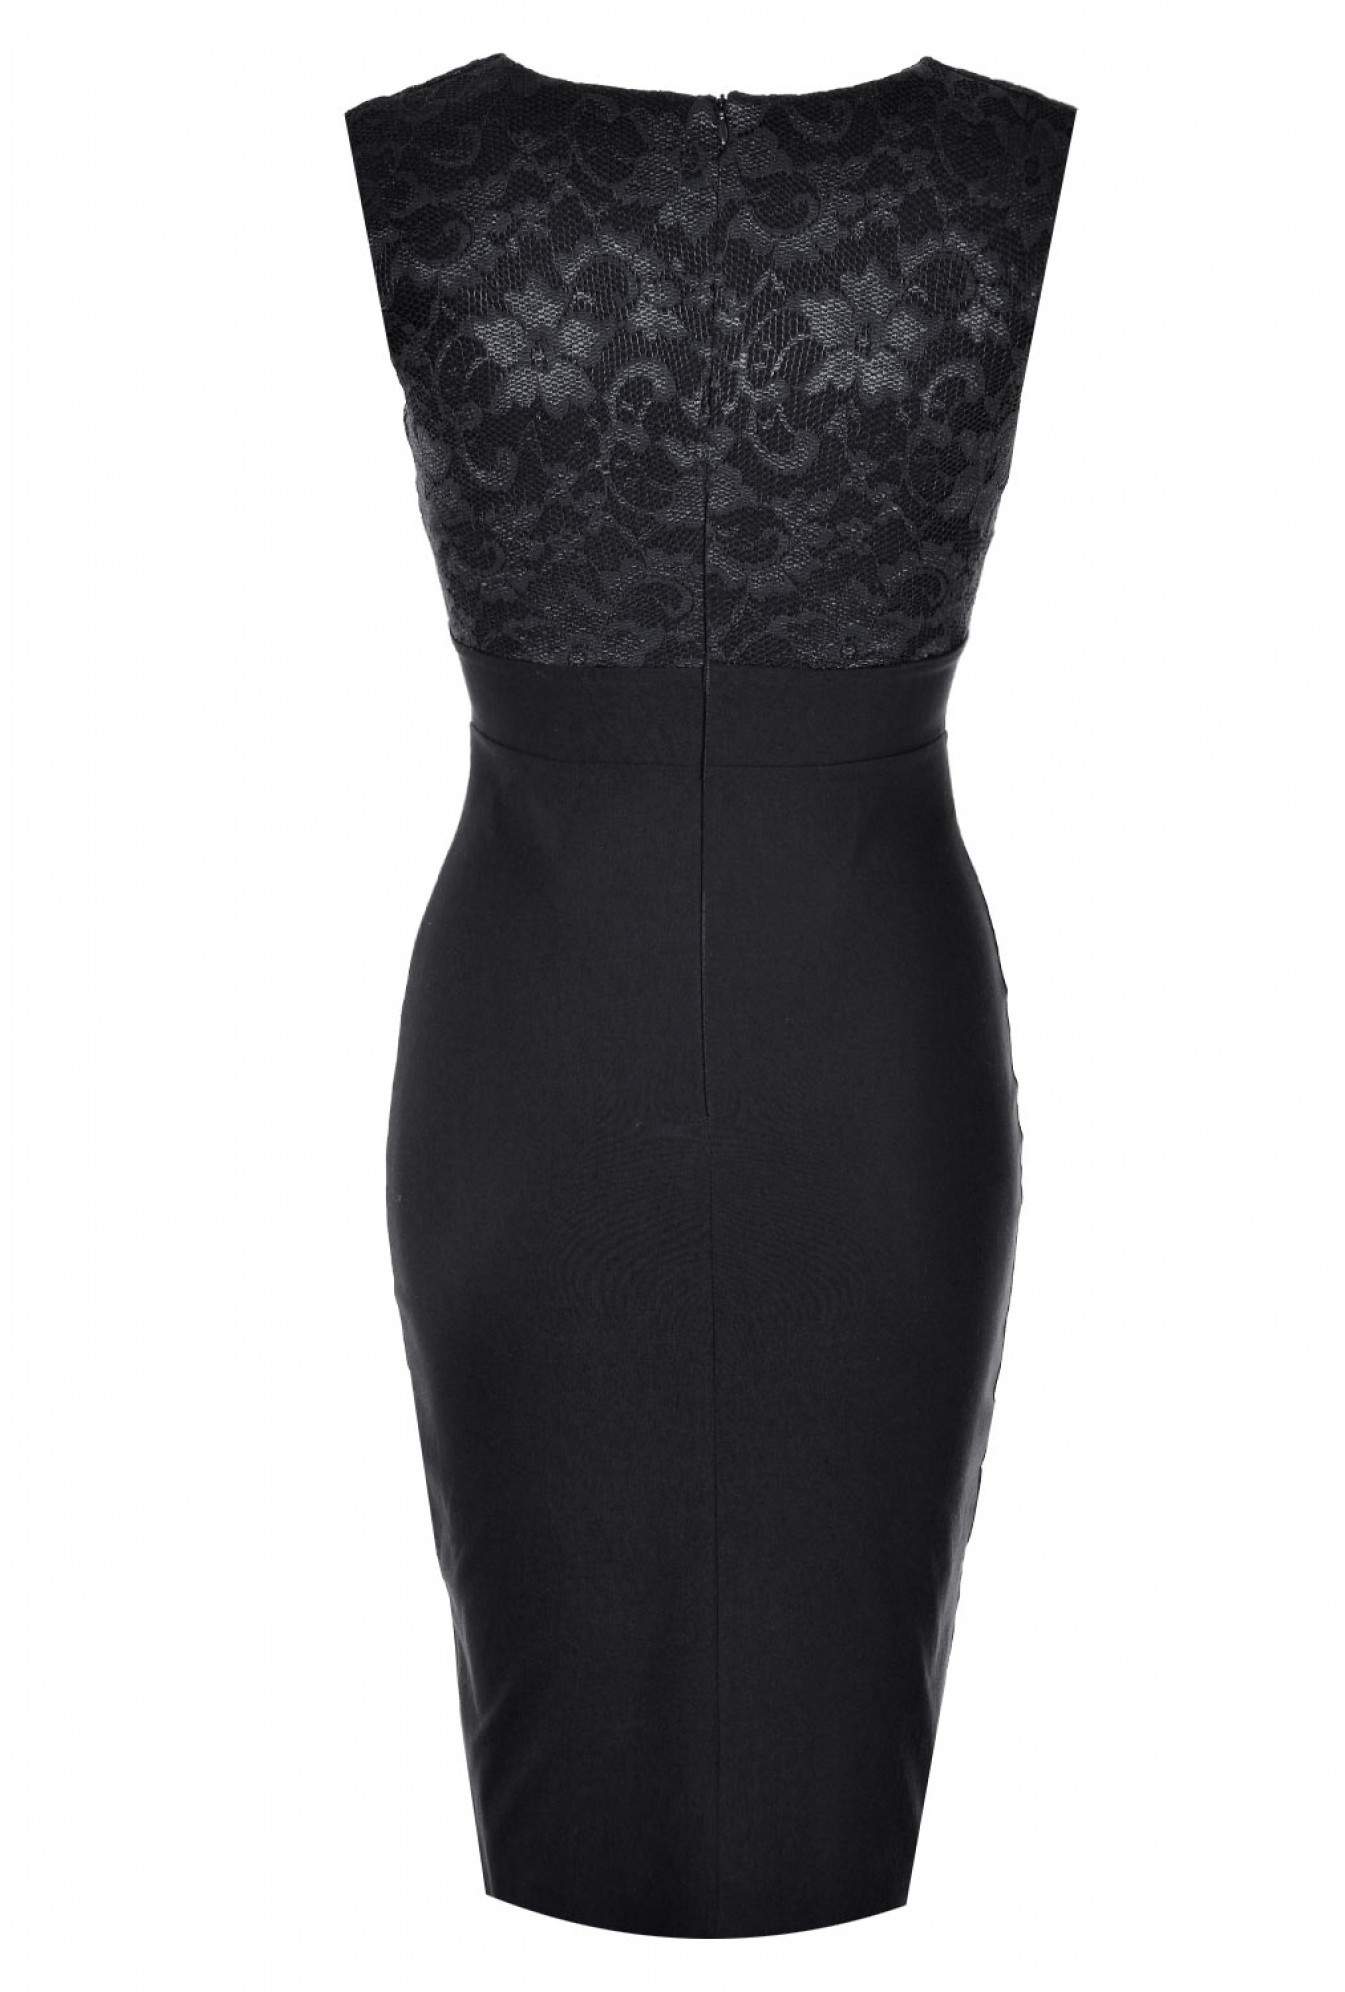 city goddess Celine Lace Top Sleeveless Midi Dress in Black | iCLOTHING